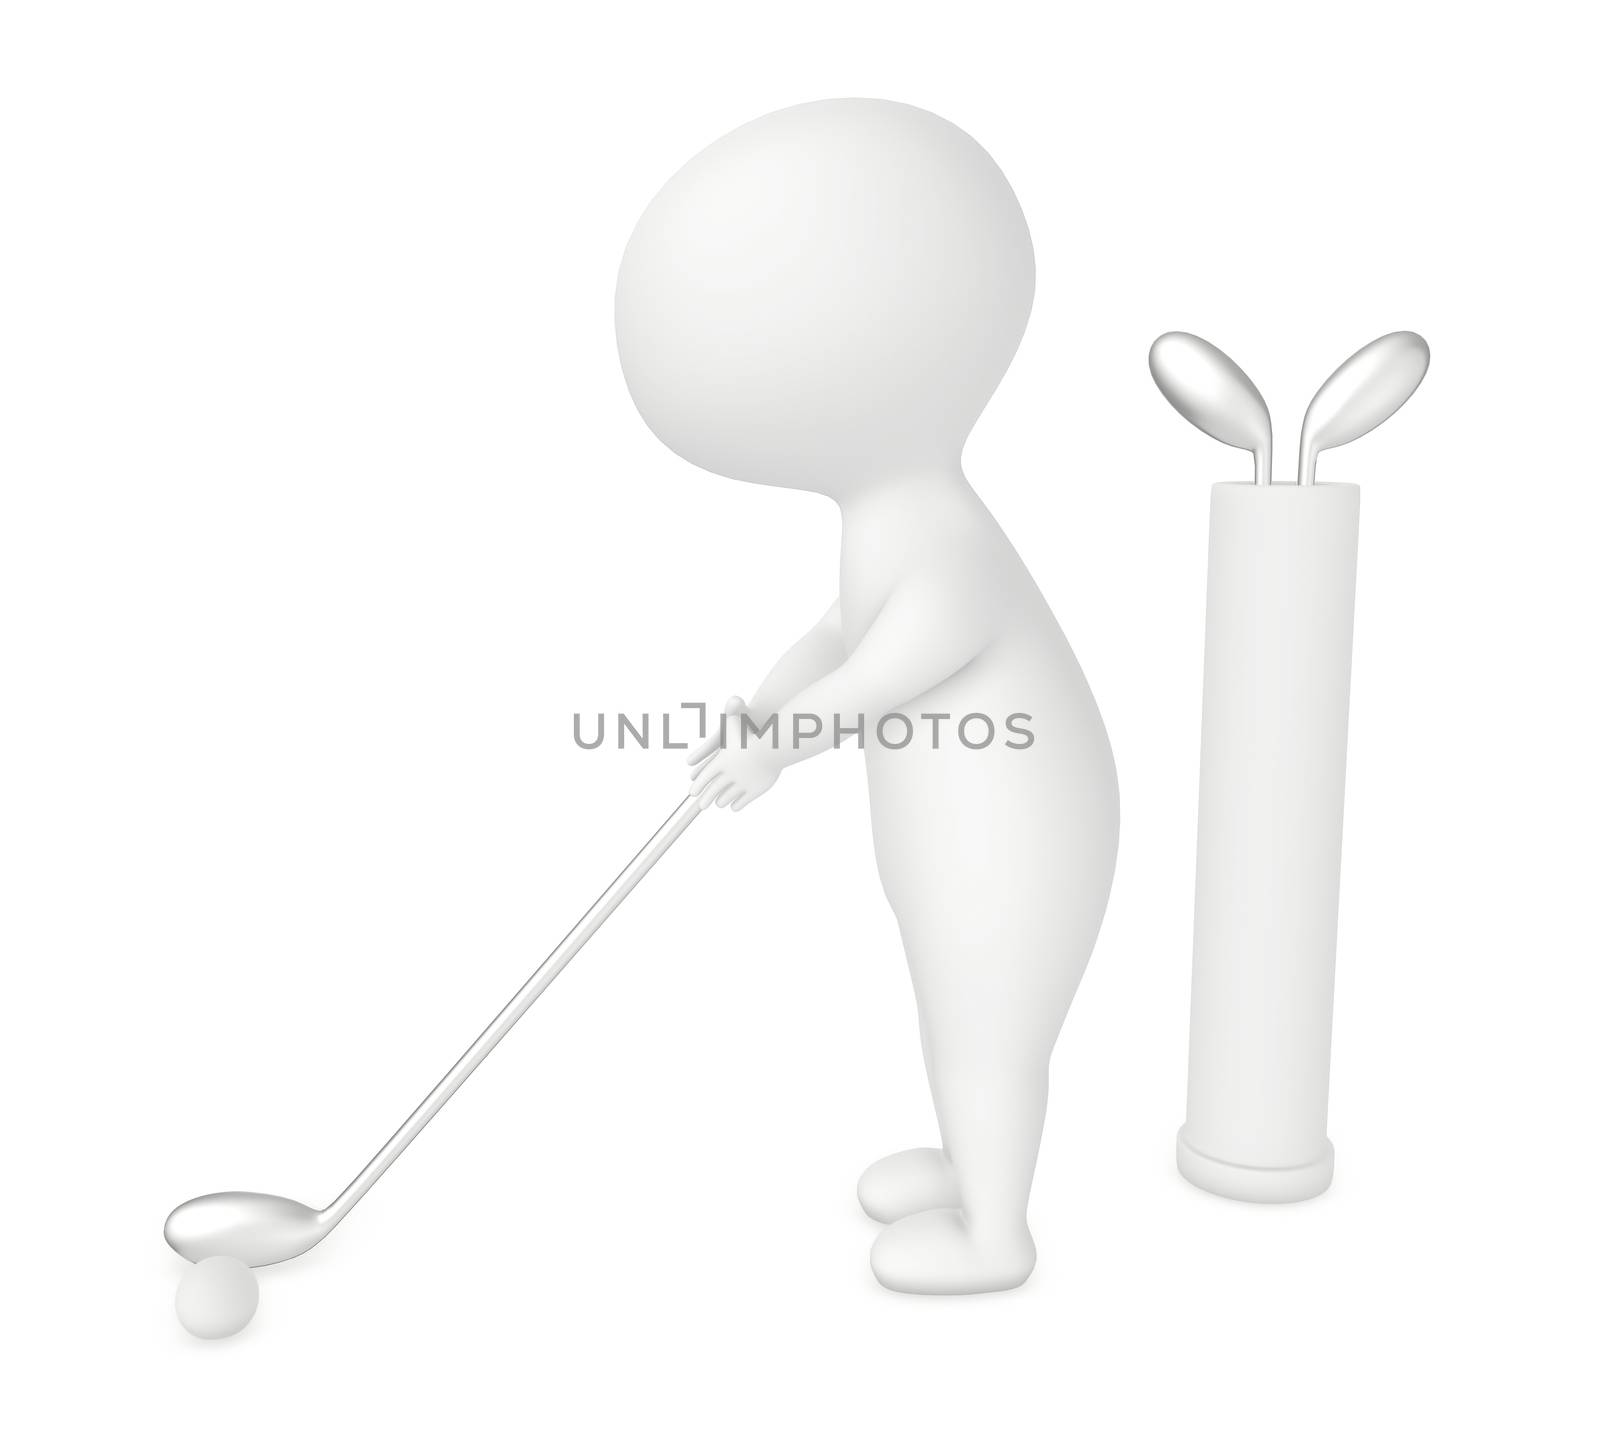 3d character , man golf player - 3d rendering